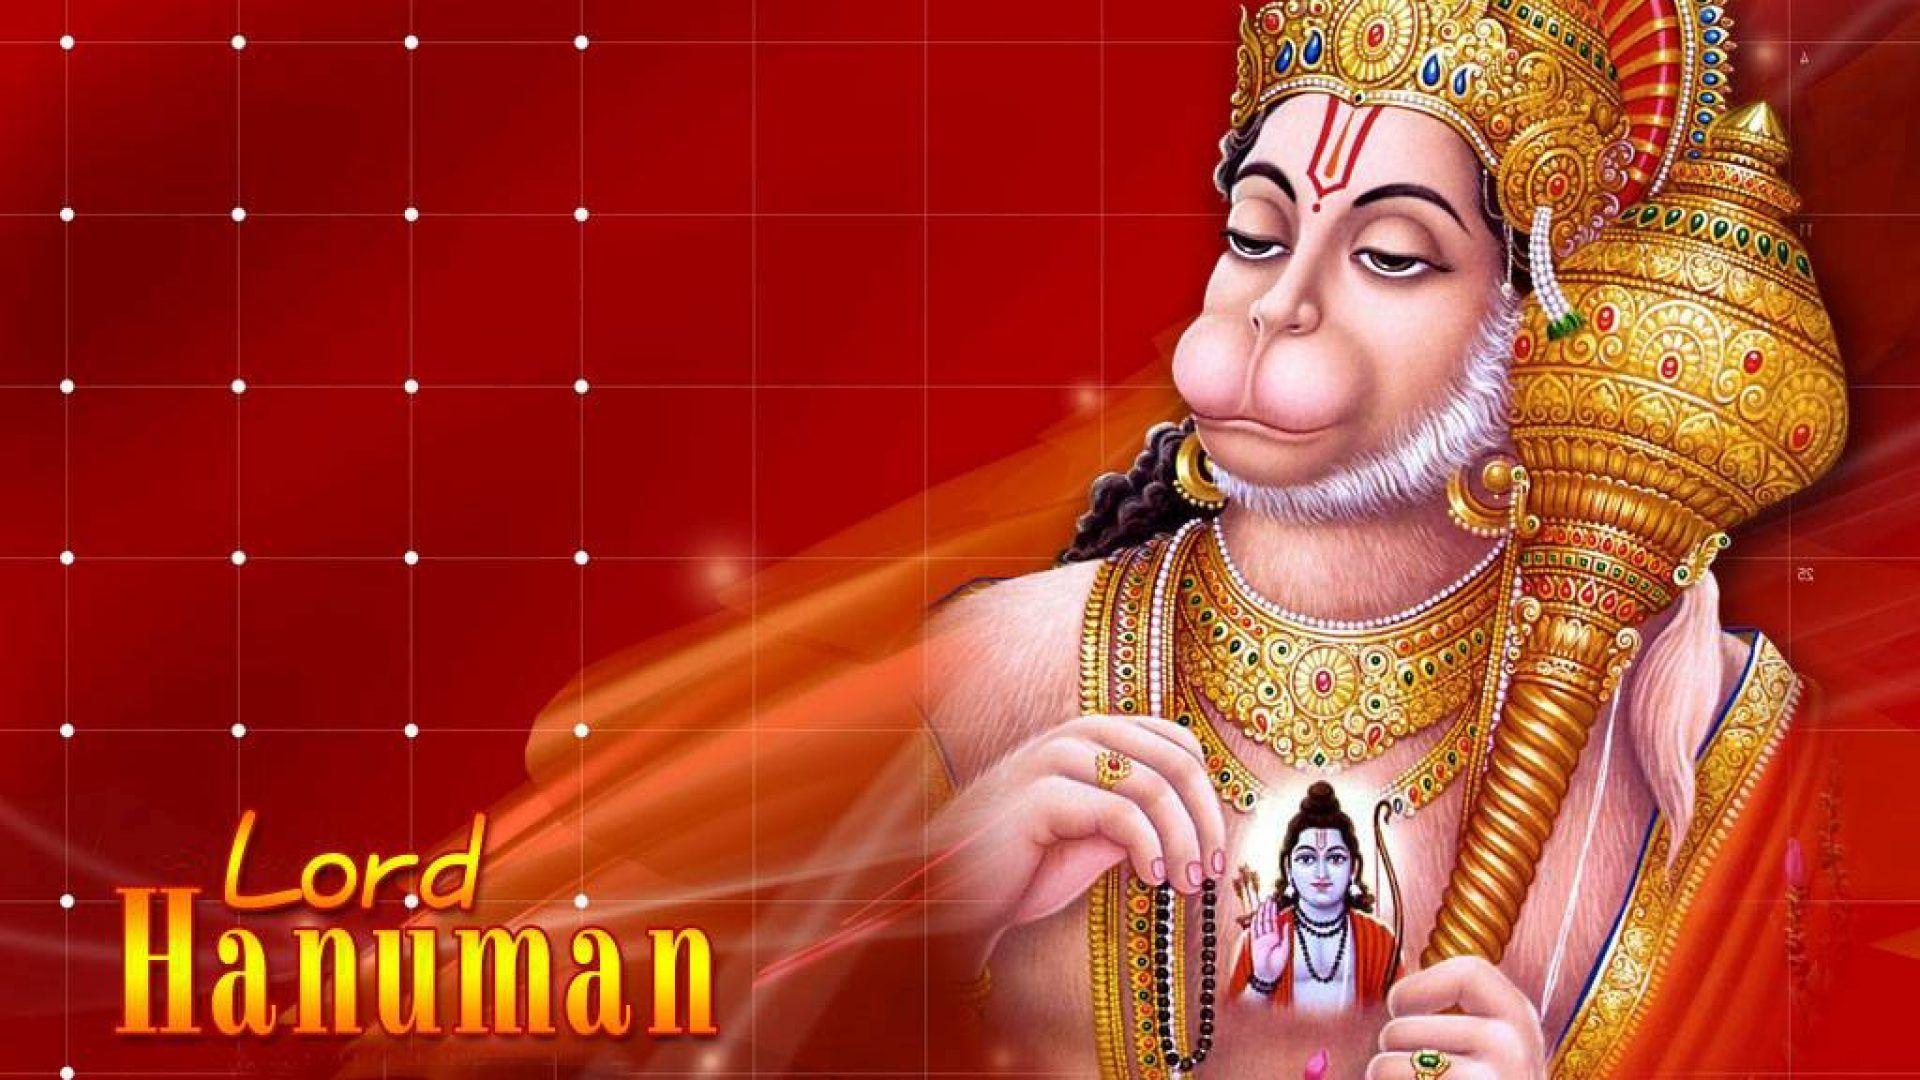 Jai Hanuman Wallpaper. Lord Hanuman. Latest Desktop Wallpaper